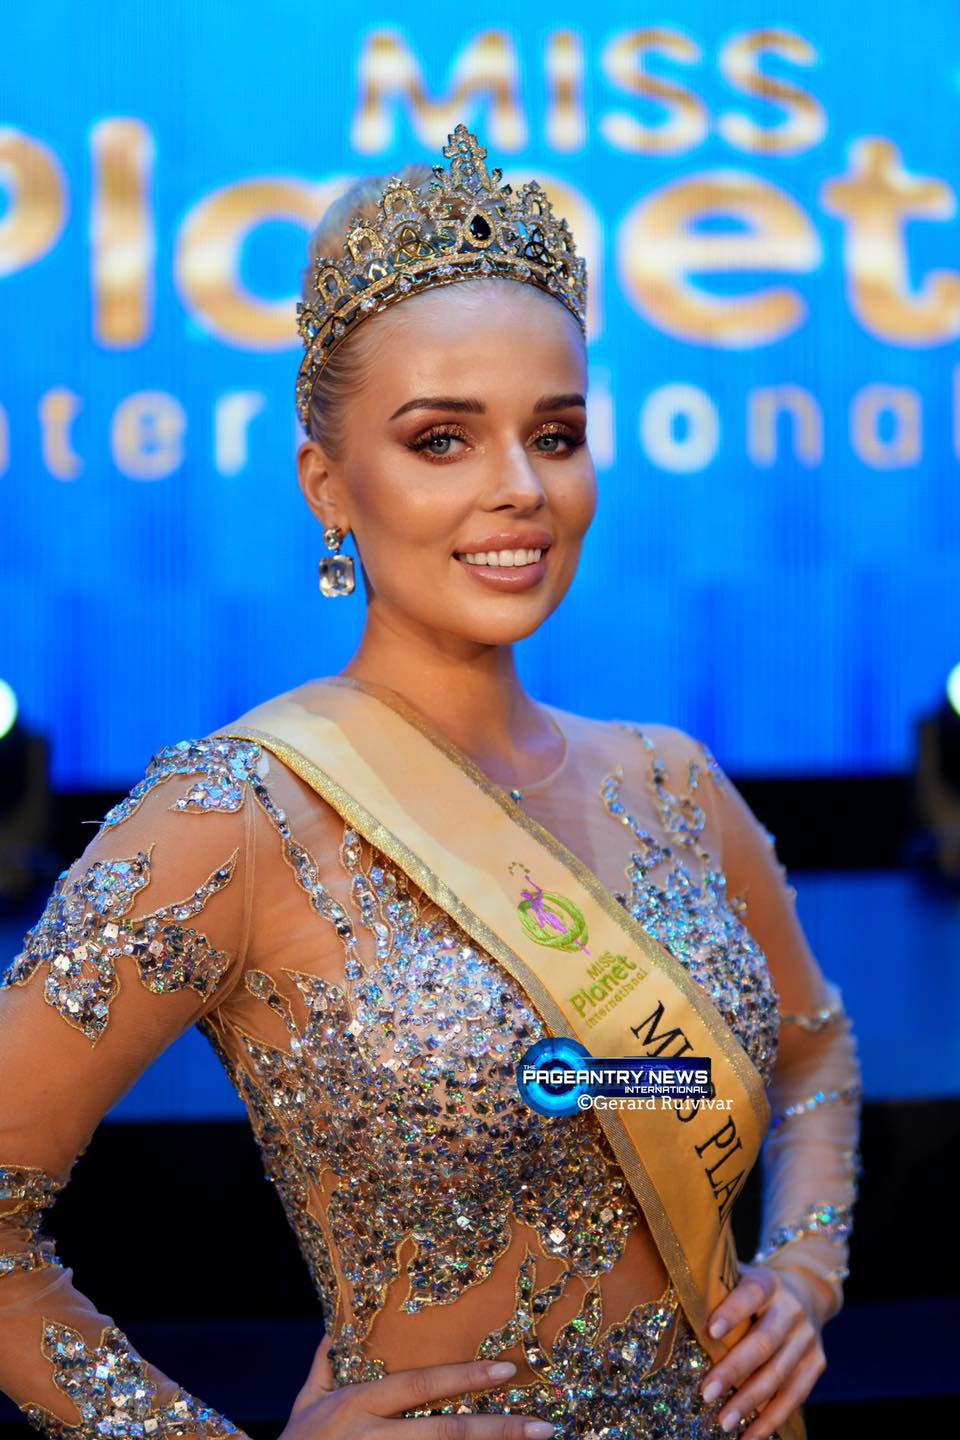 Philippines’ Maria Luisa Abaño Varela Wins Miss Planet International 2022! 32690910